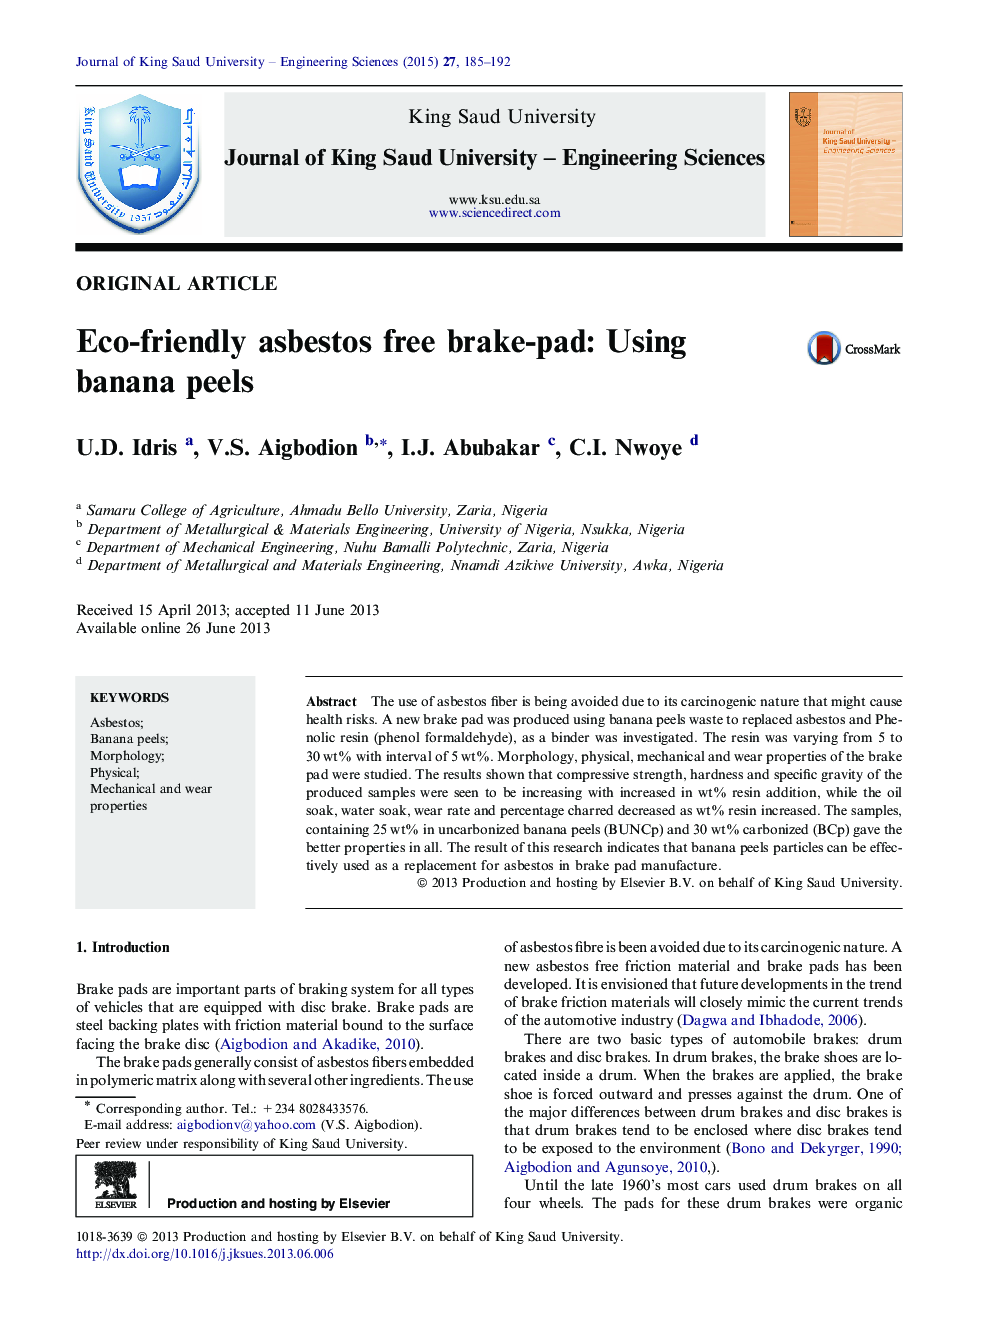 Eco-friendly asbestos free brake-pad: Using banana peels 